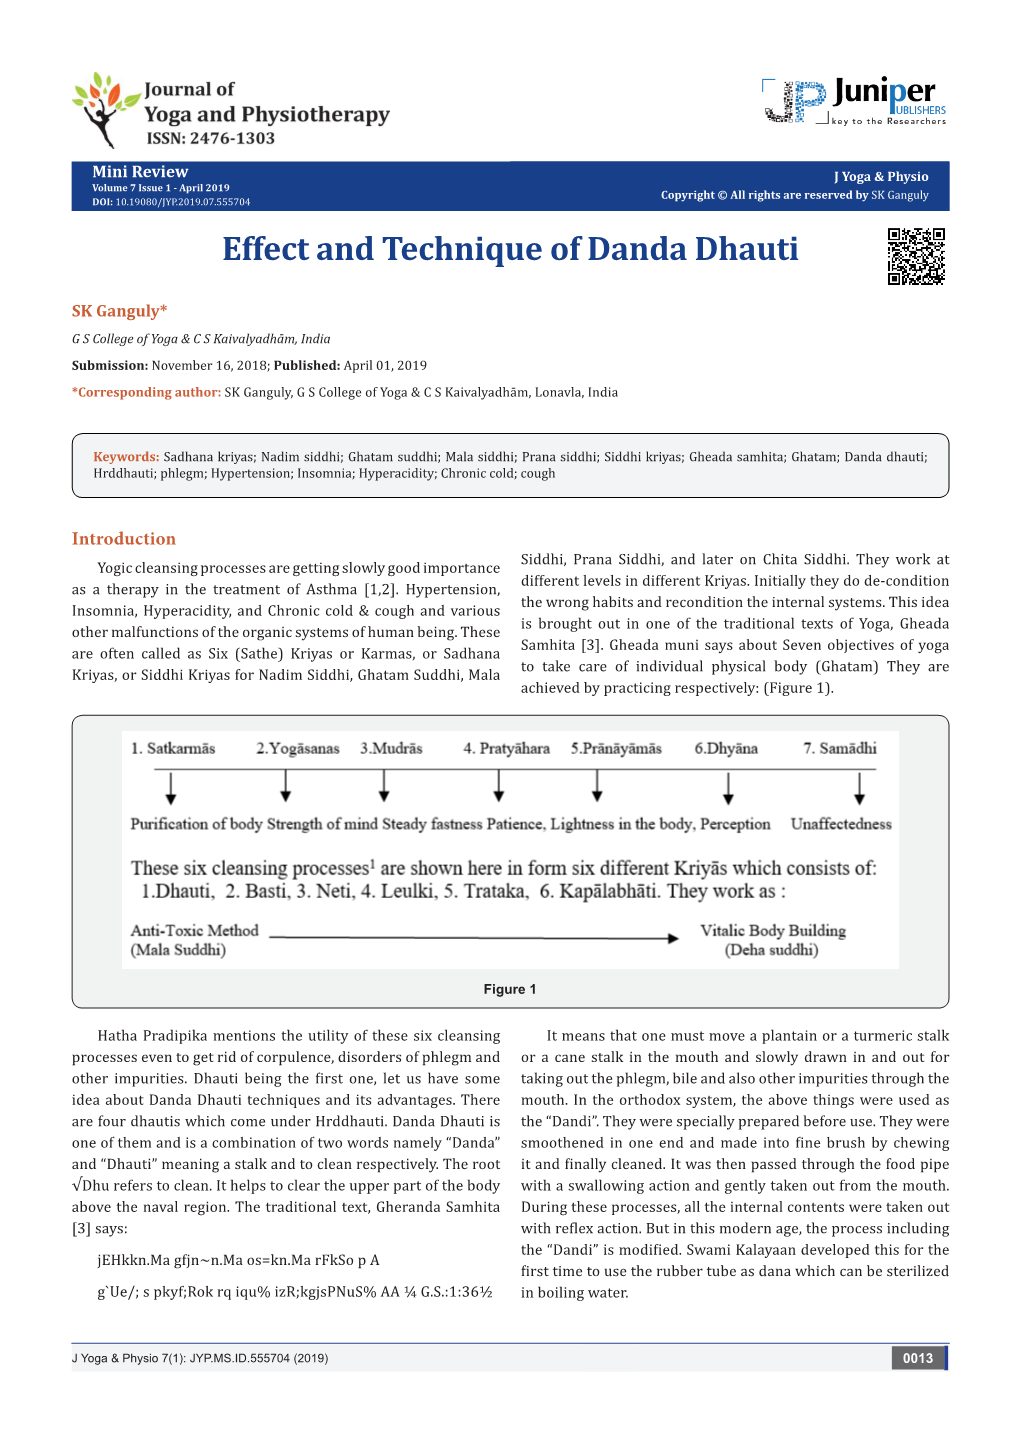 Effect and Technique of Danda Dhauti